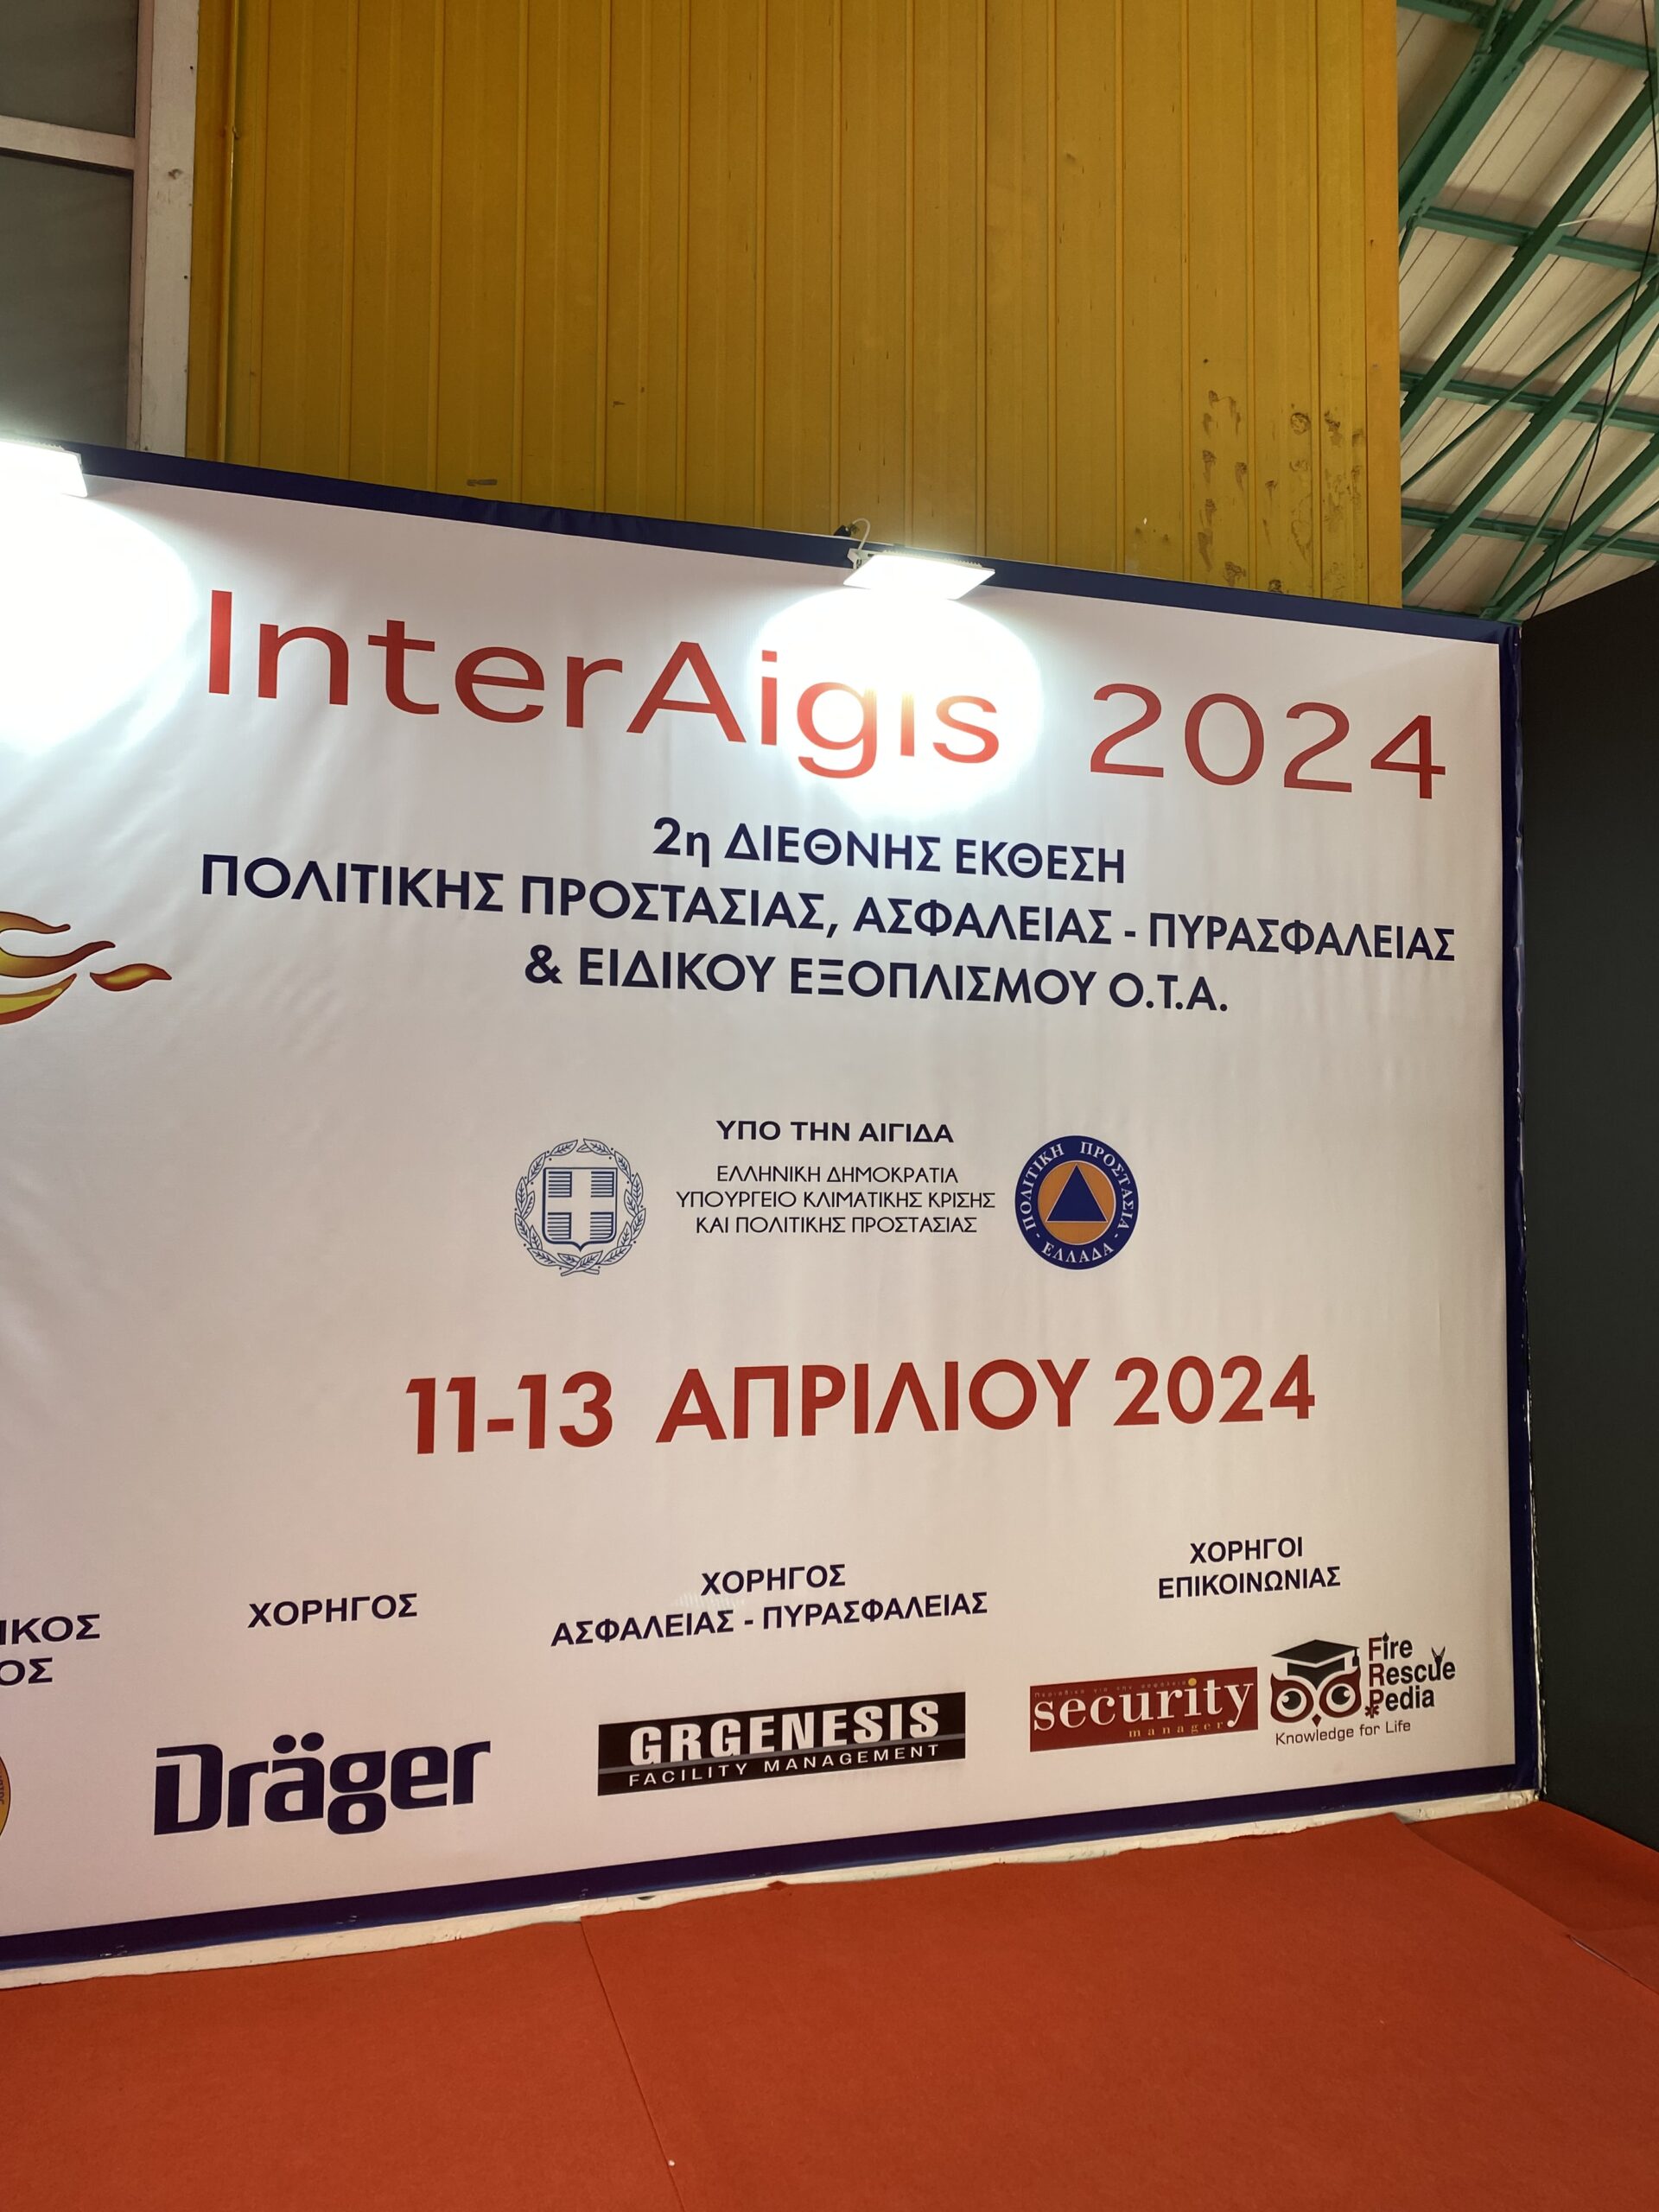 InterAigis 2024 – H Πυρασφάλεια και Πολιτική Προστασία στο επίκεντρο